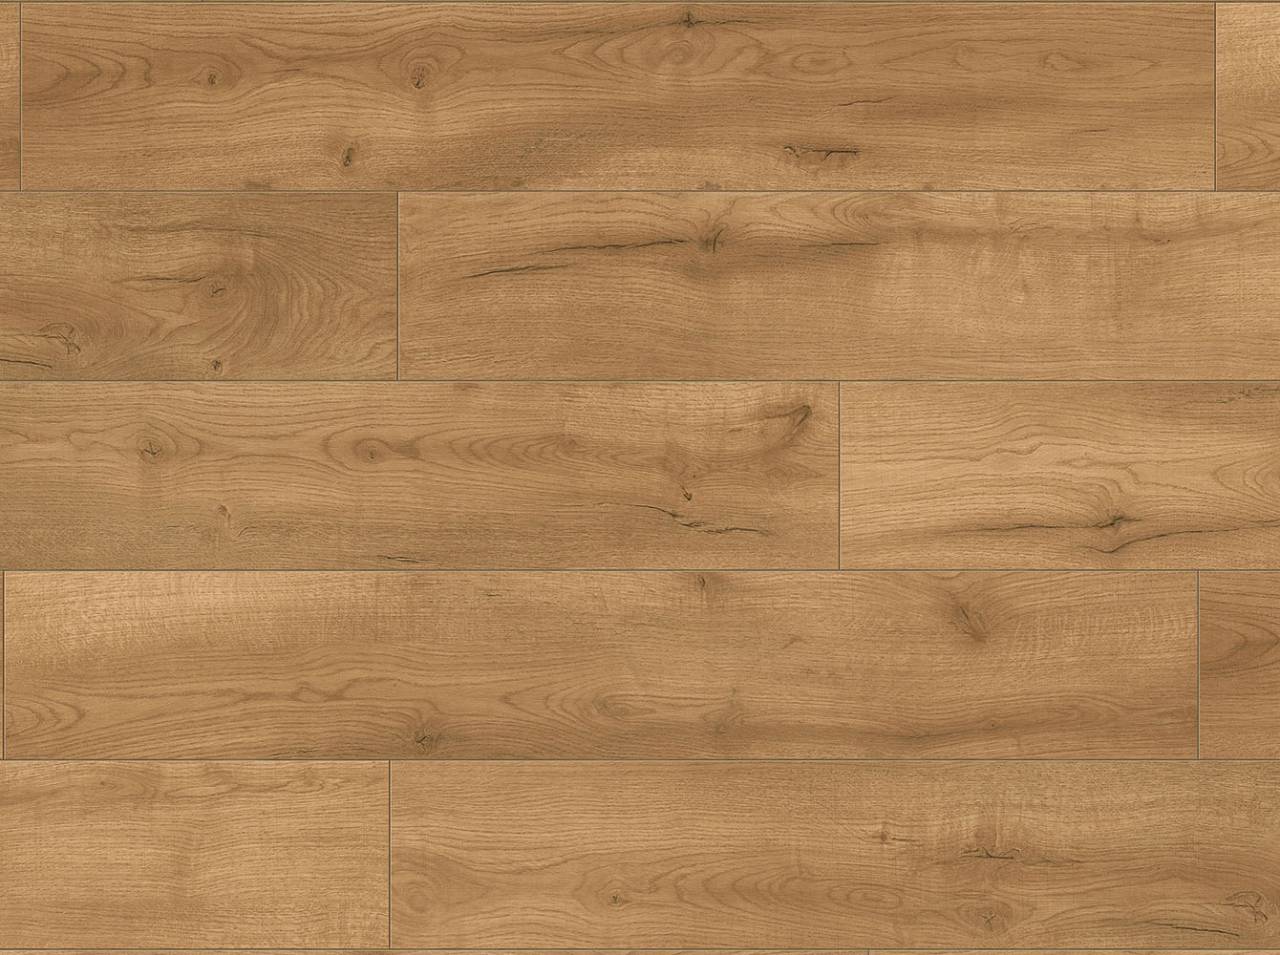 Close-up image of Z209 Butterscotch Oak SPC flooring highlighting its detailed wood grain texture.